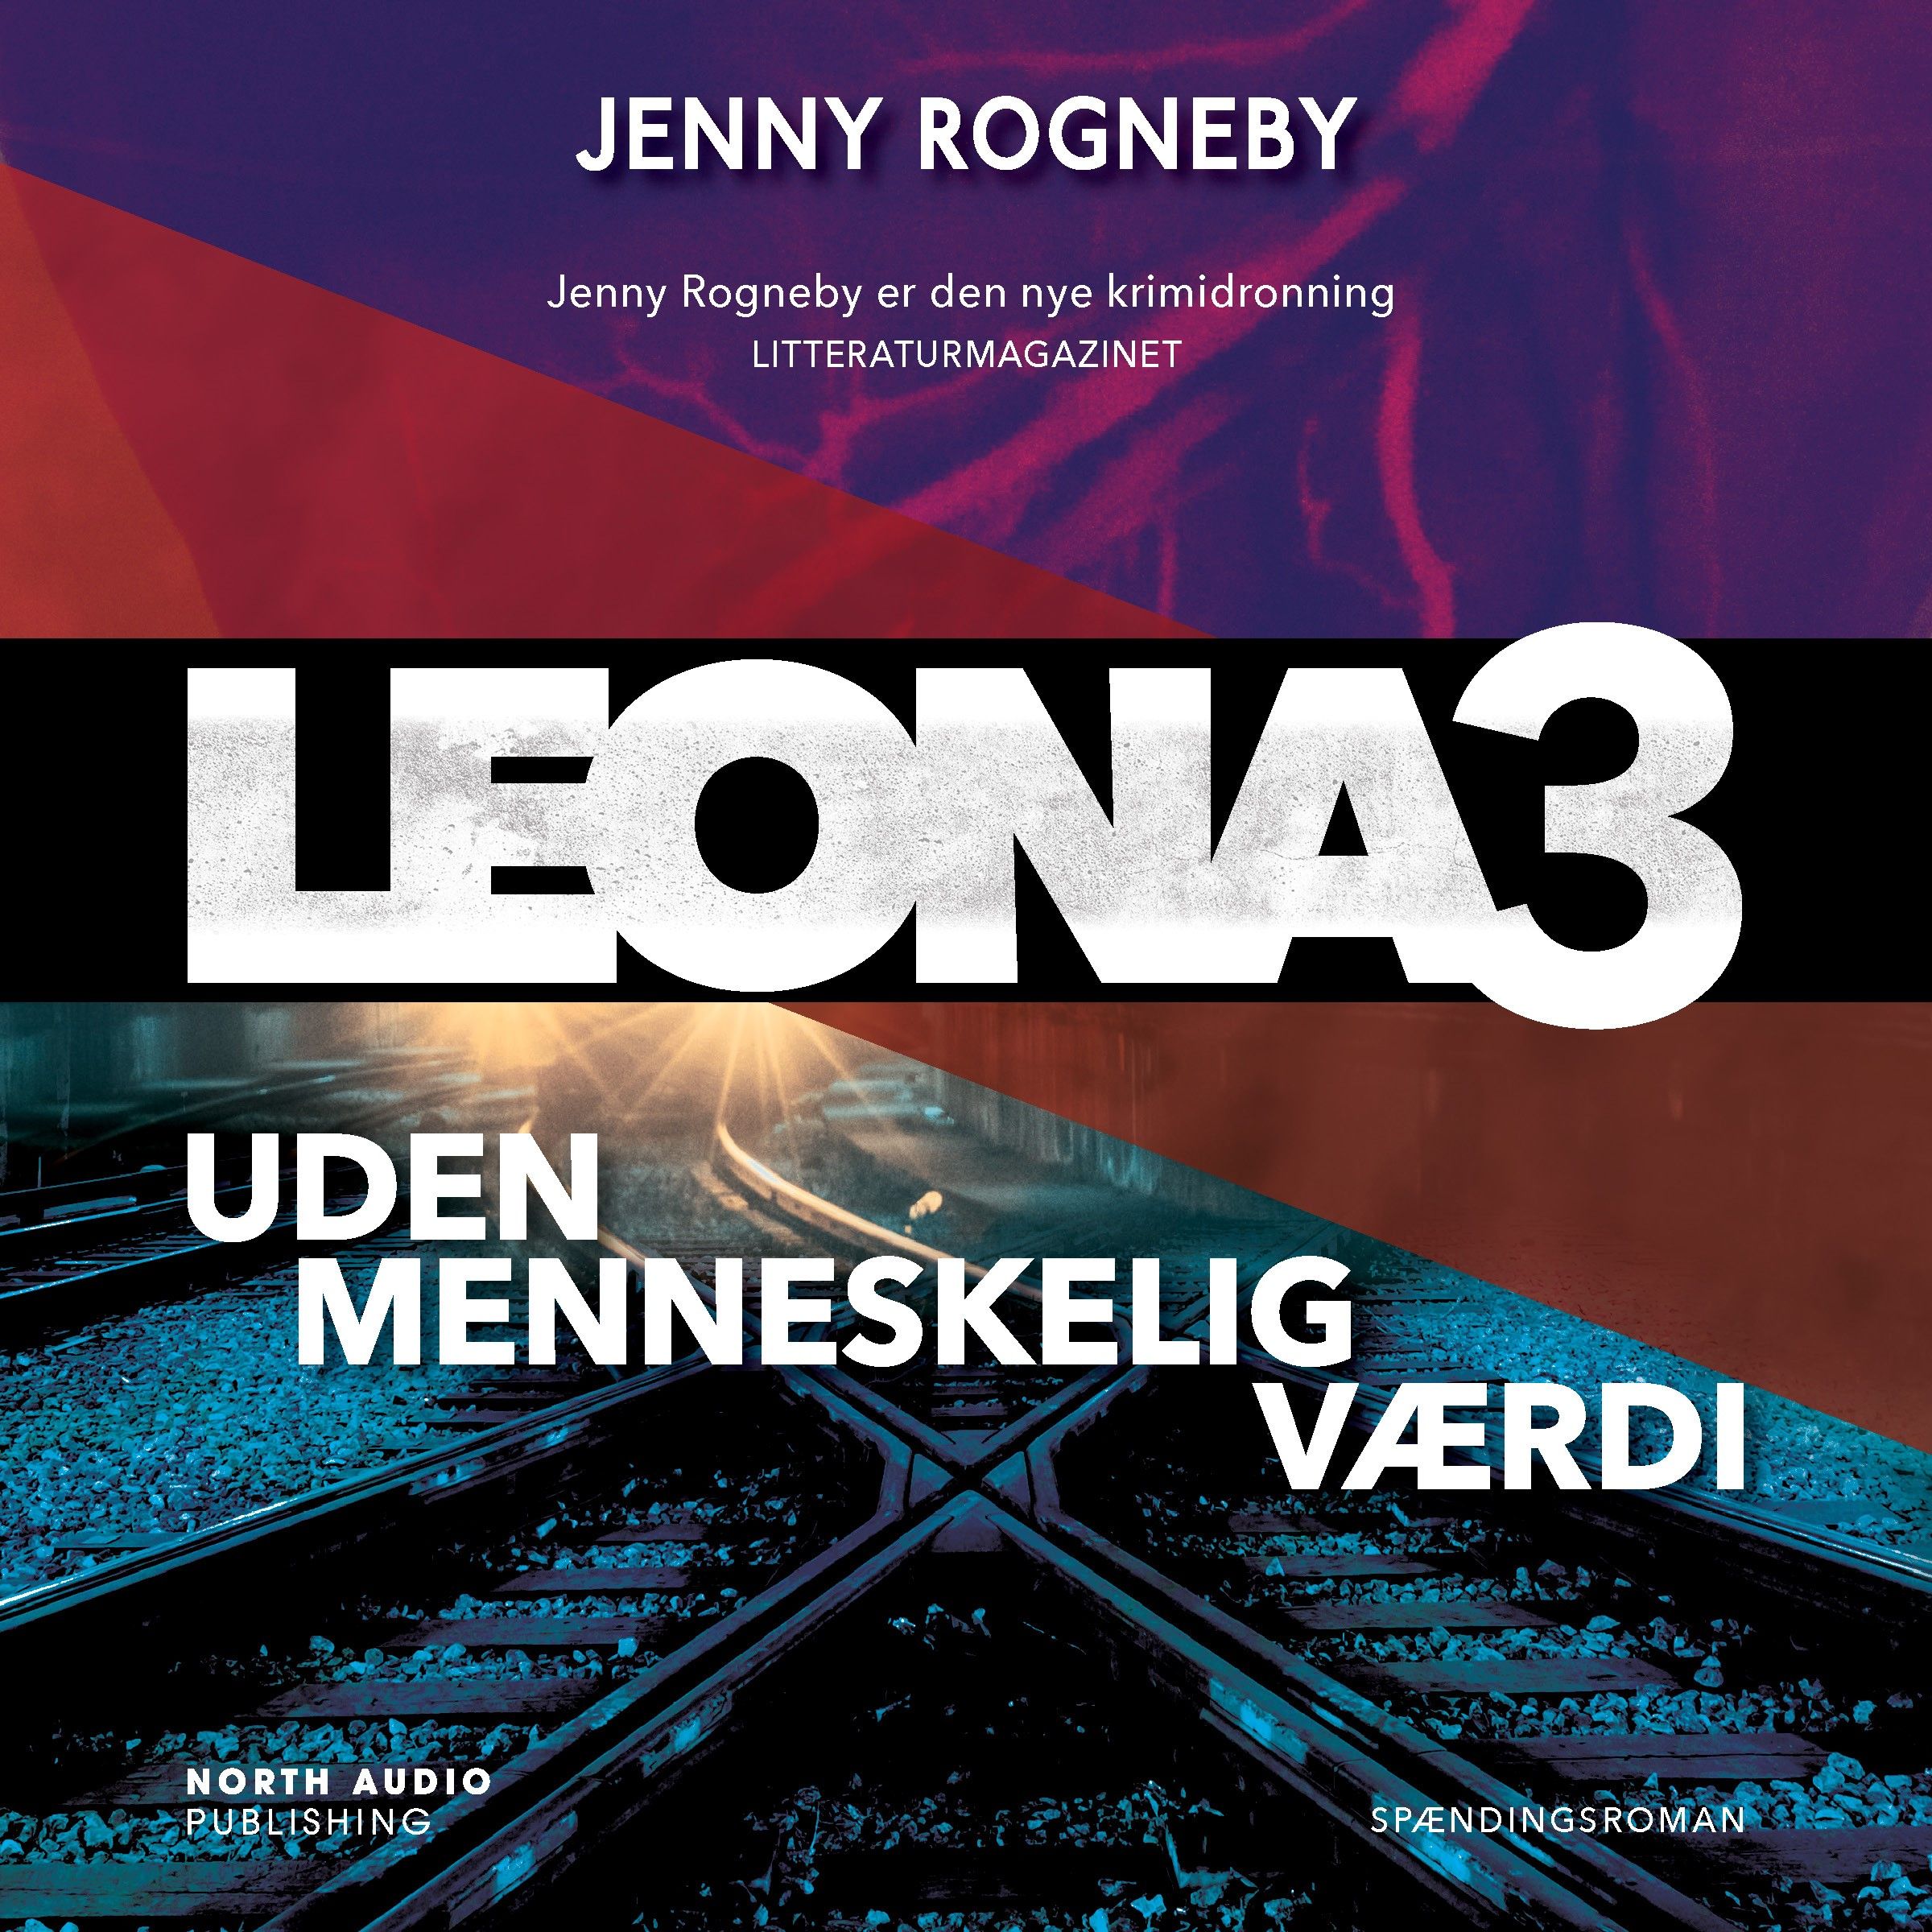 Leona - uden menneskelig værdi, ljudbok av Jenny Rogneby